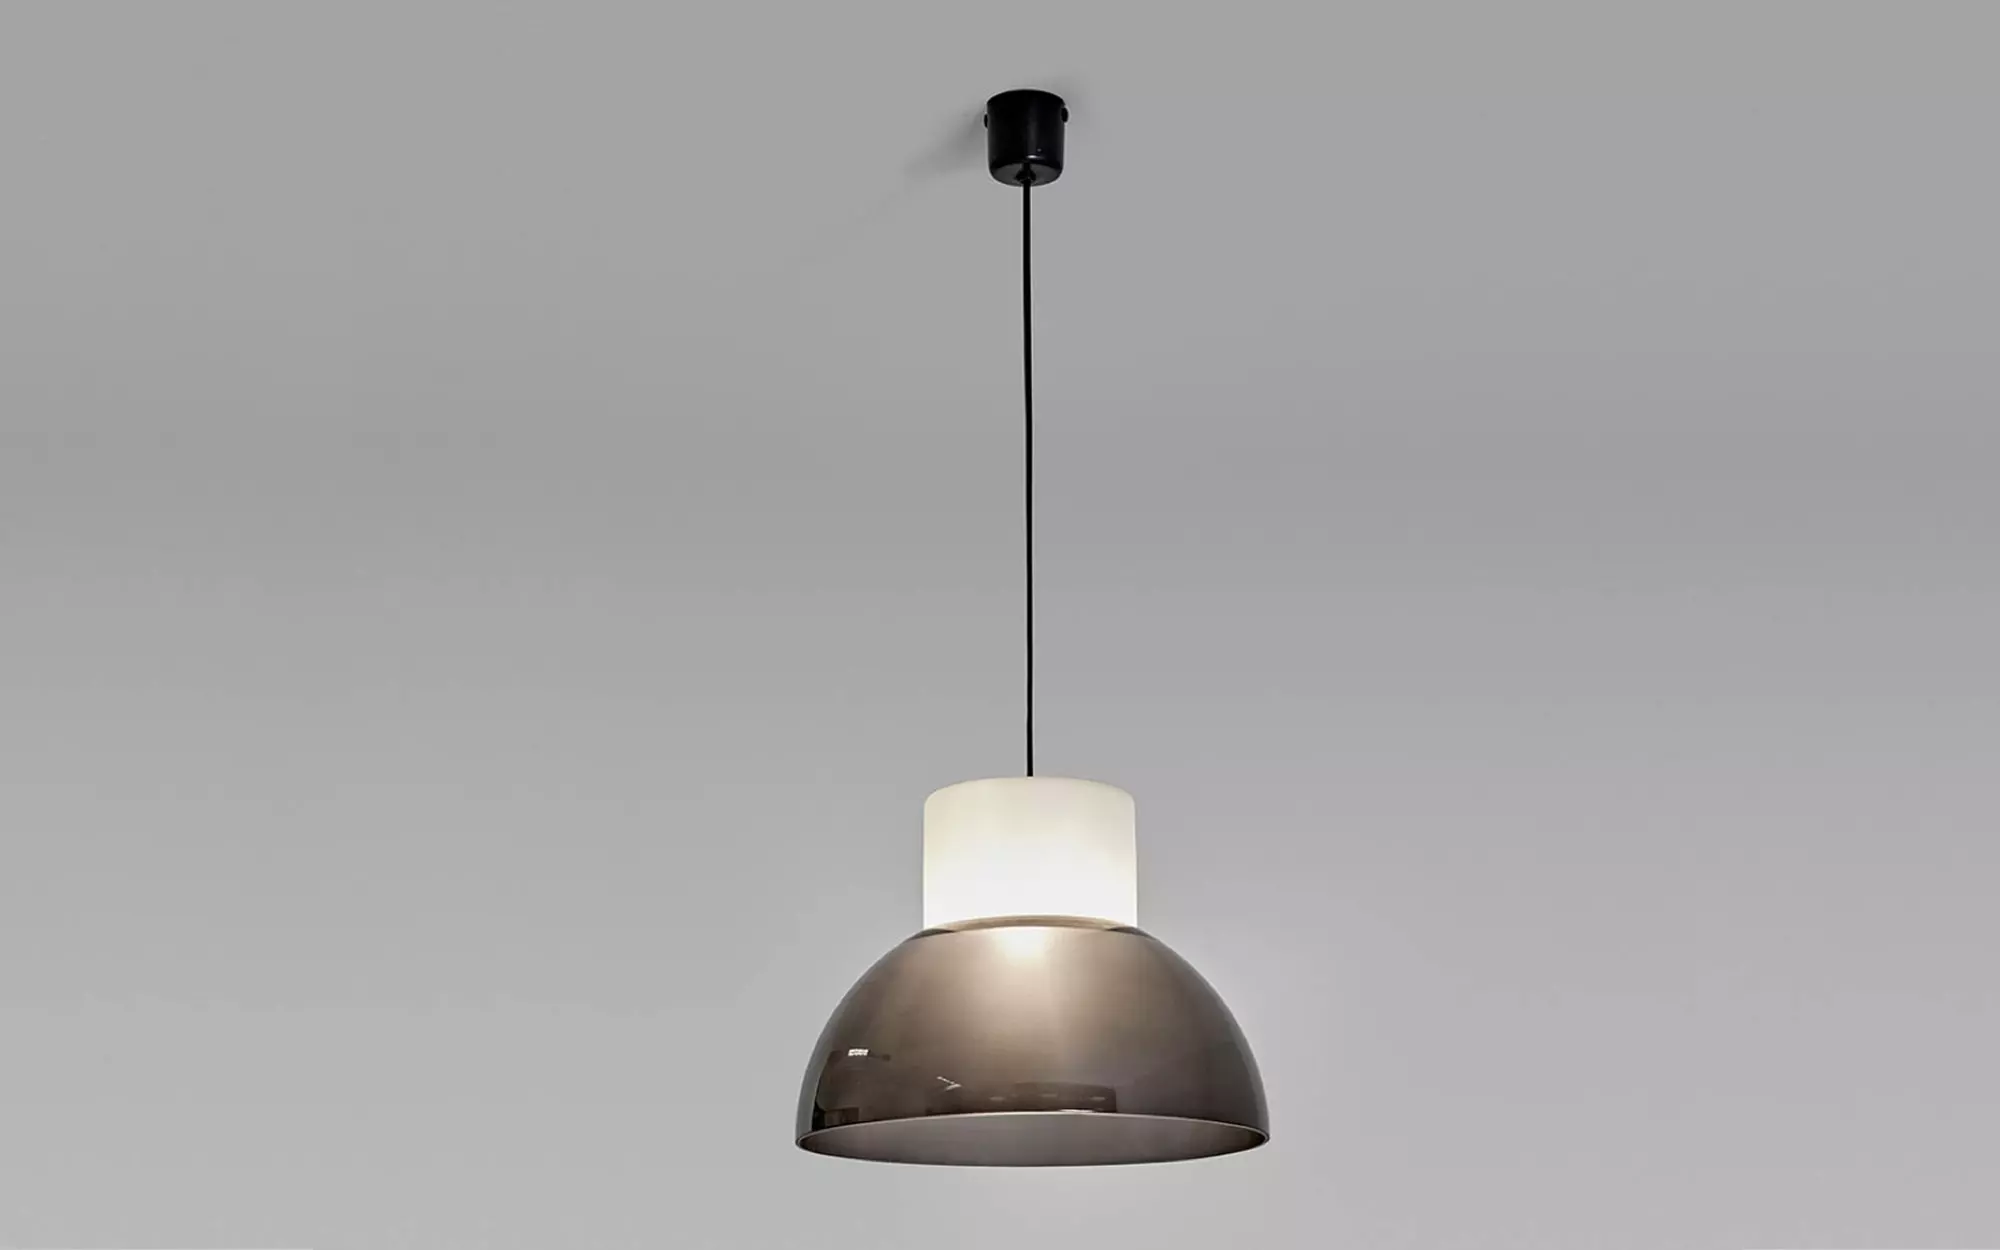 2103 (grey) - Gino Sarfatti - Floor light - Galerie kreo